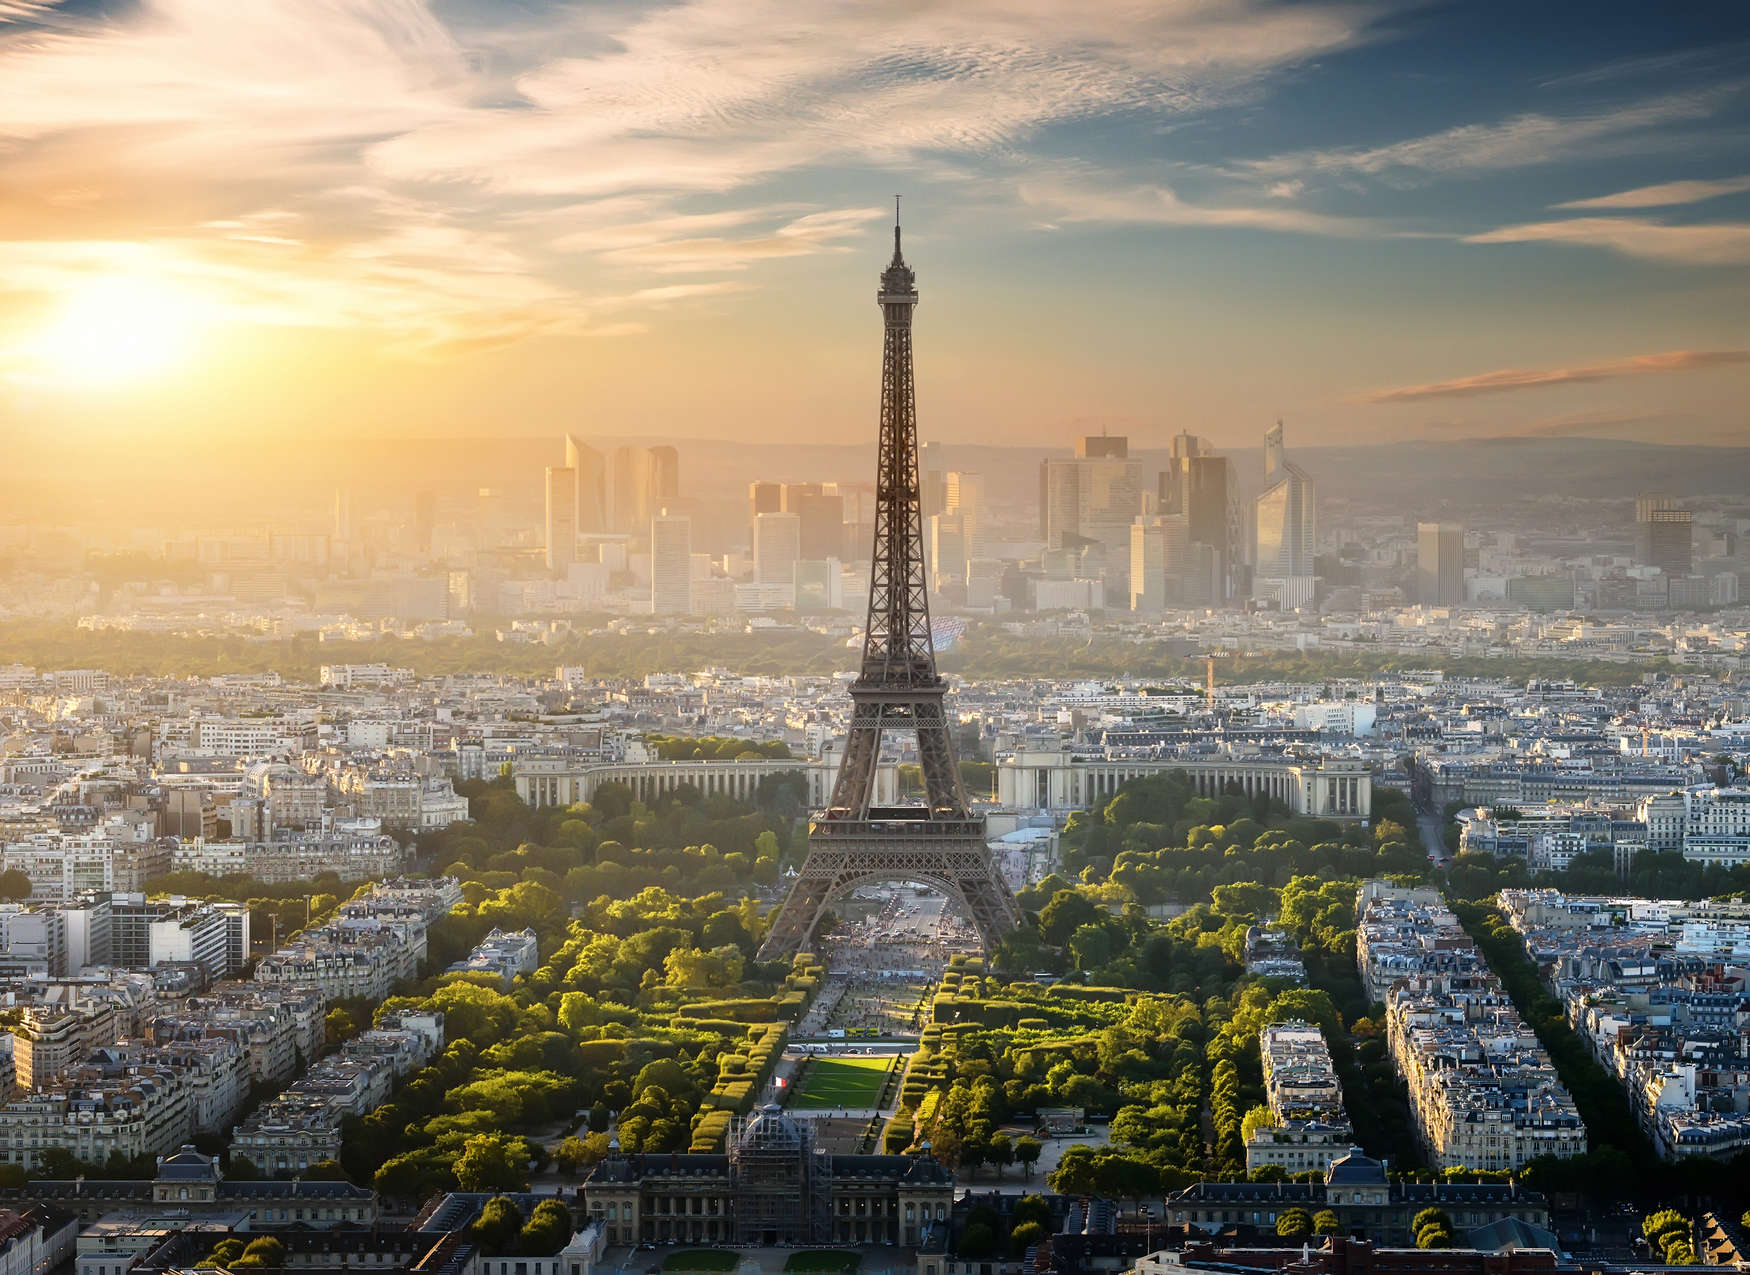             Carta da parati Torre Eifel Parigi - Verde, grigio, giallo
        